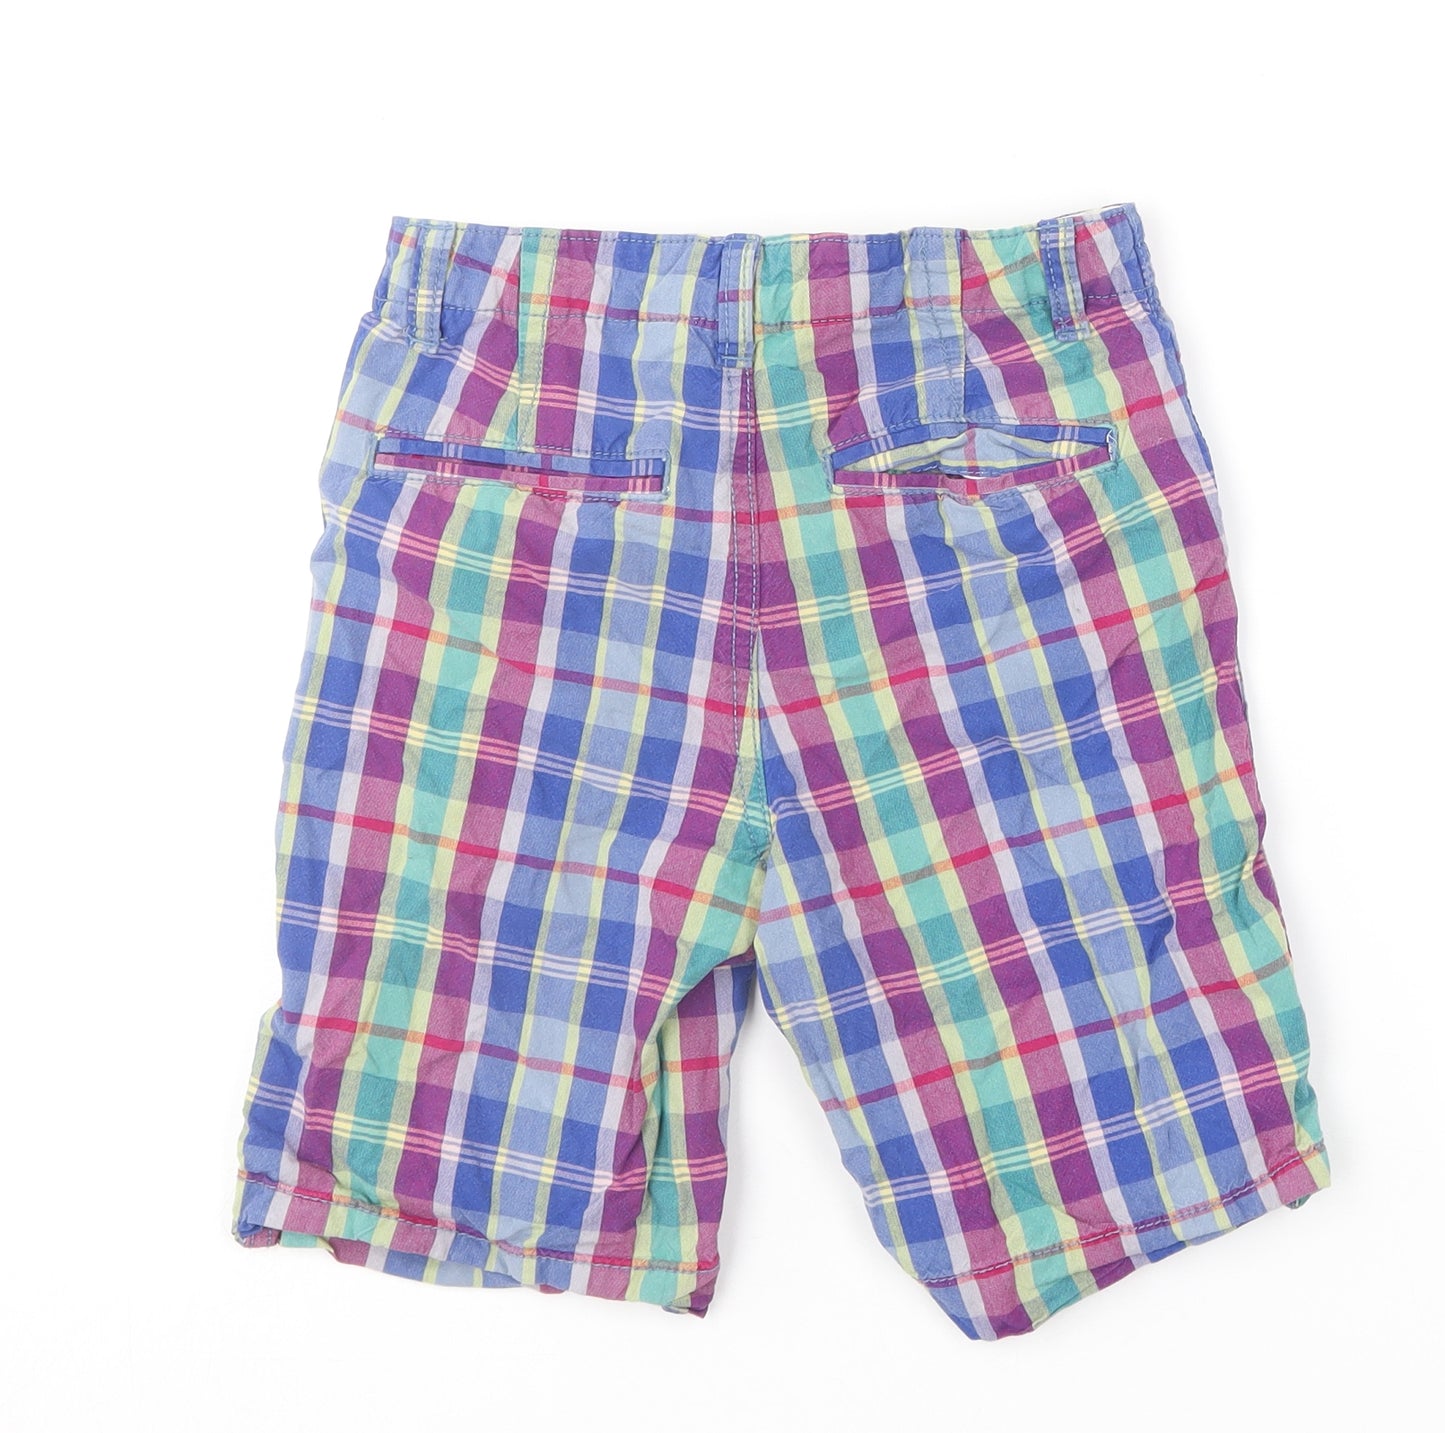 Gap Boys Multicoloured Plaid Cotton Chino Shorts Size 7 Years  Regular